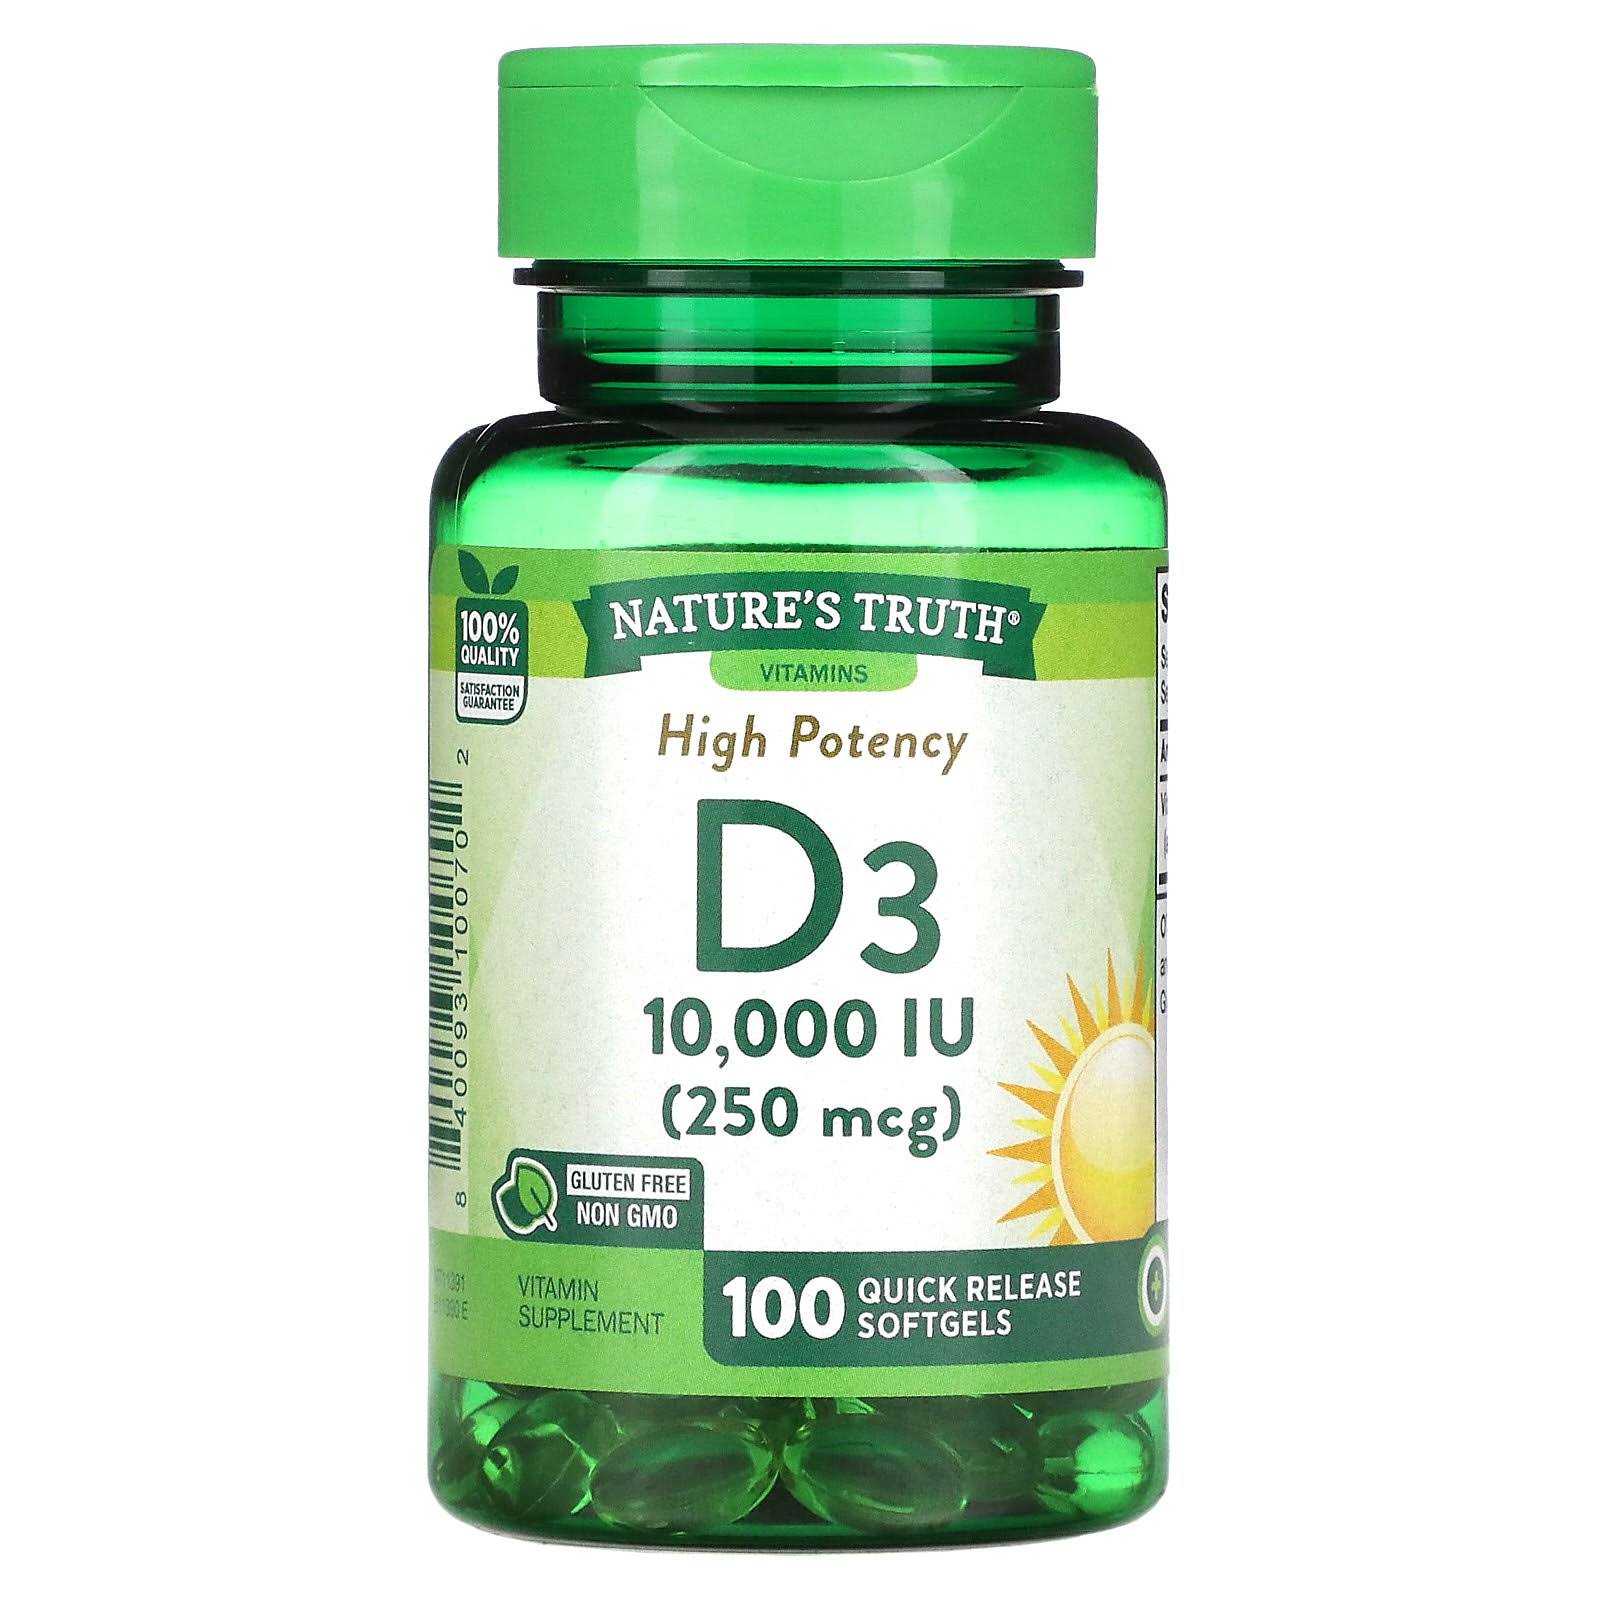 Nature's Truth High Potency Vitamin D3 250 MCG (10 000 IU) 100 Quick Release Softgels